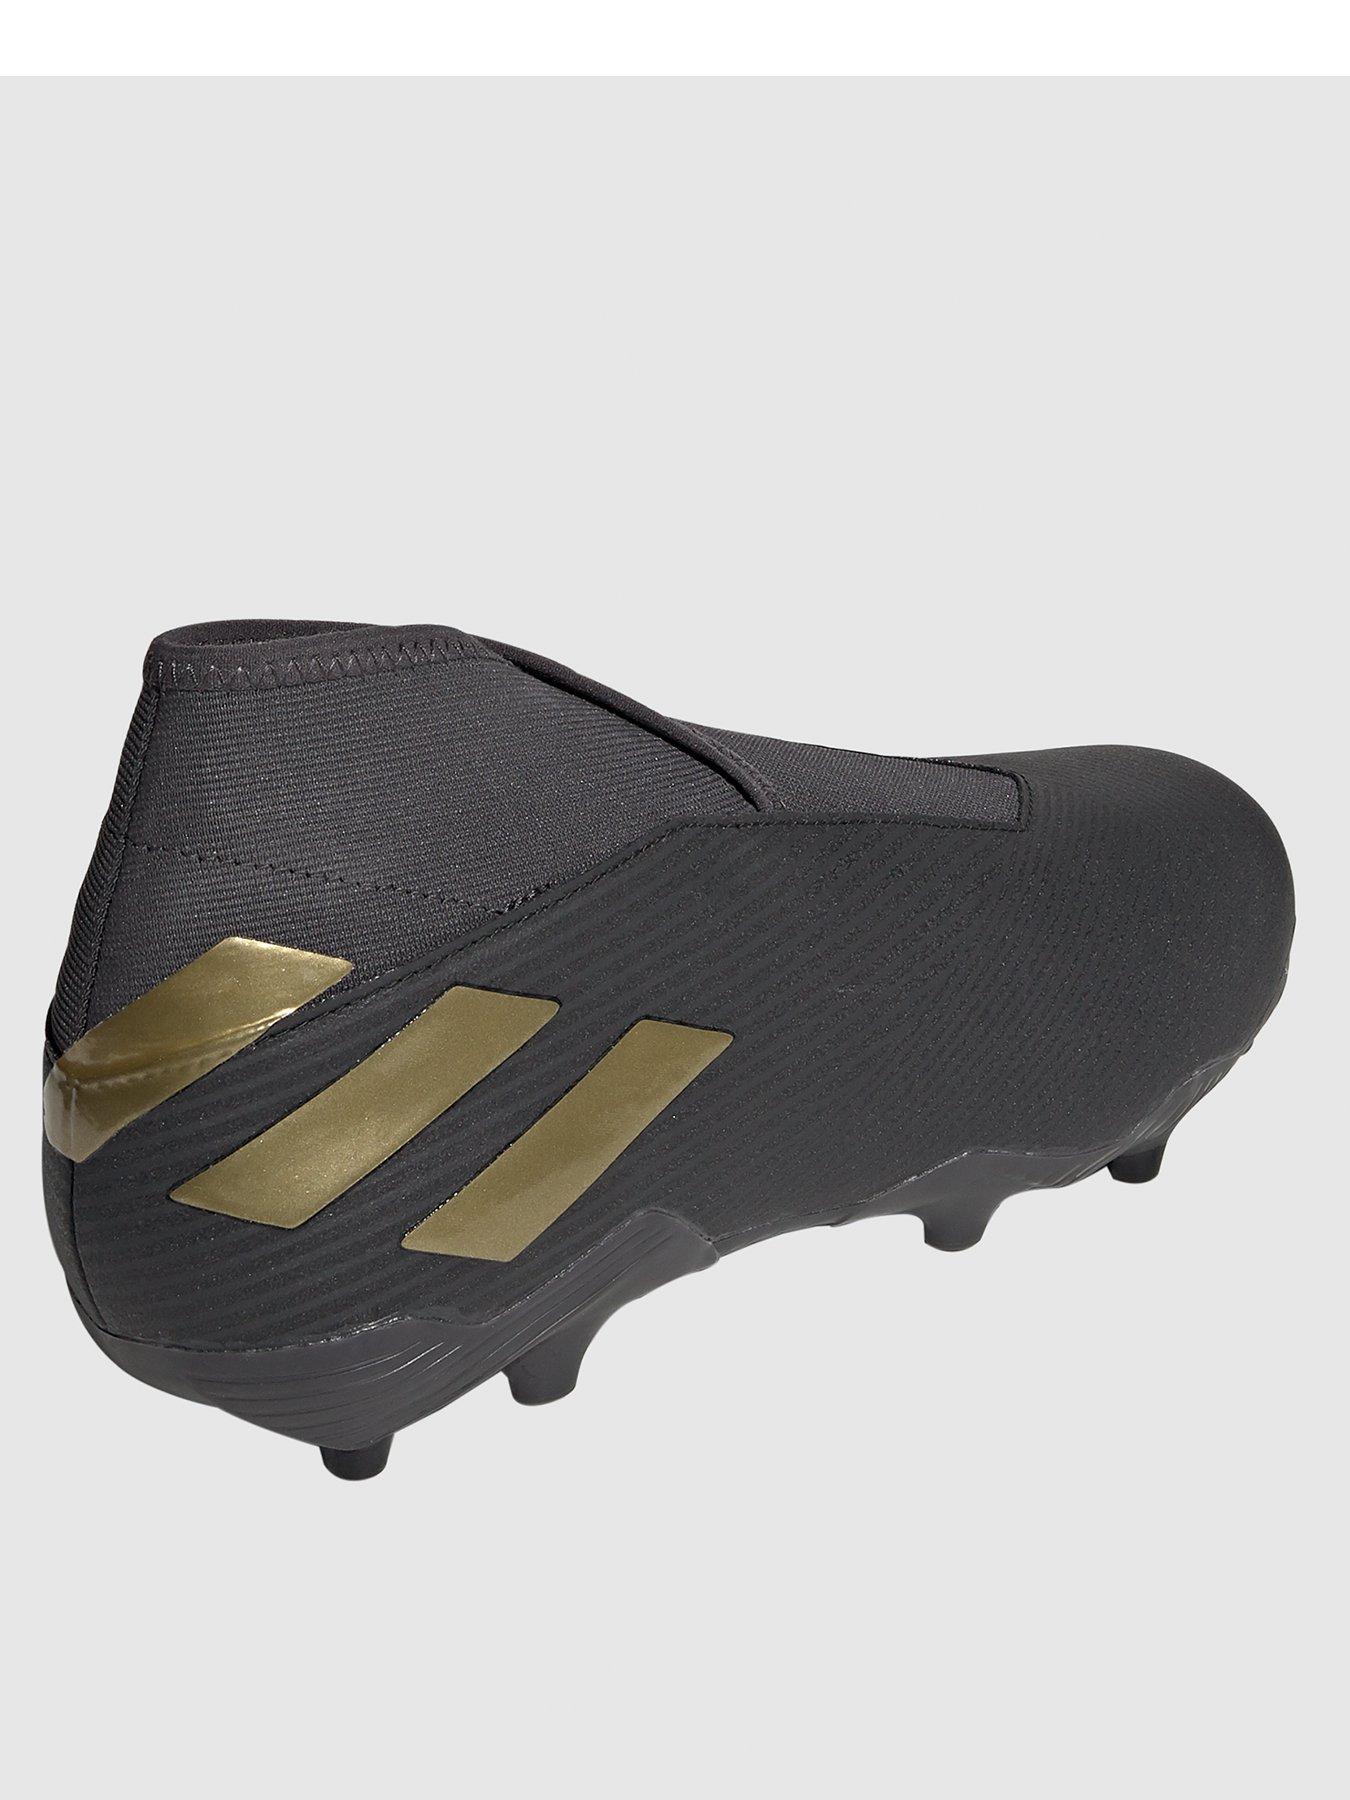 Adidas Nemeziz Laceless 19 3 Firm Ground Football Boot Black